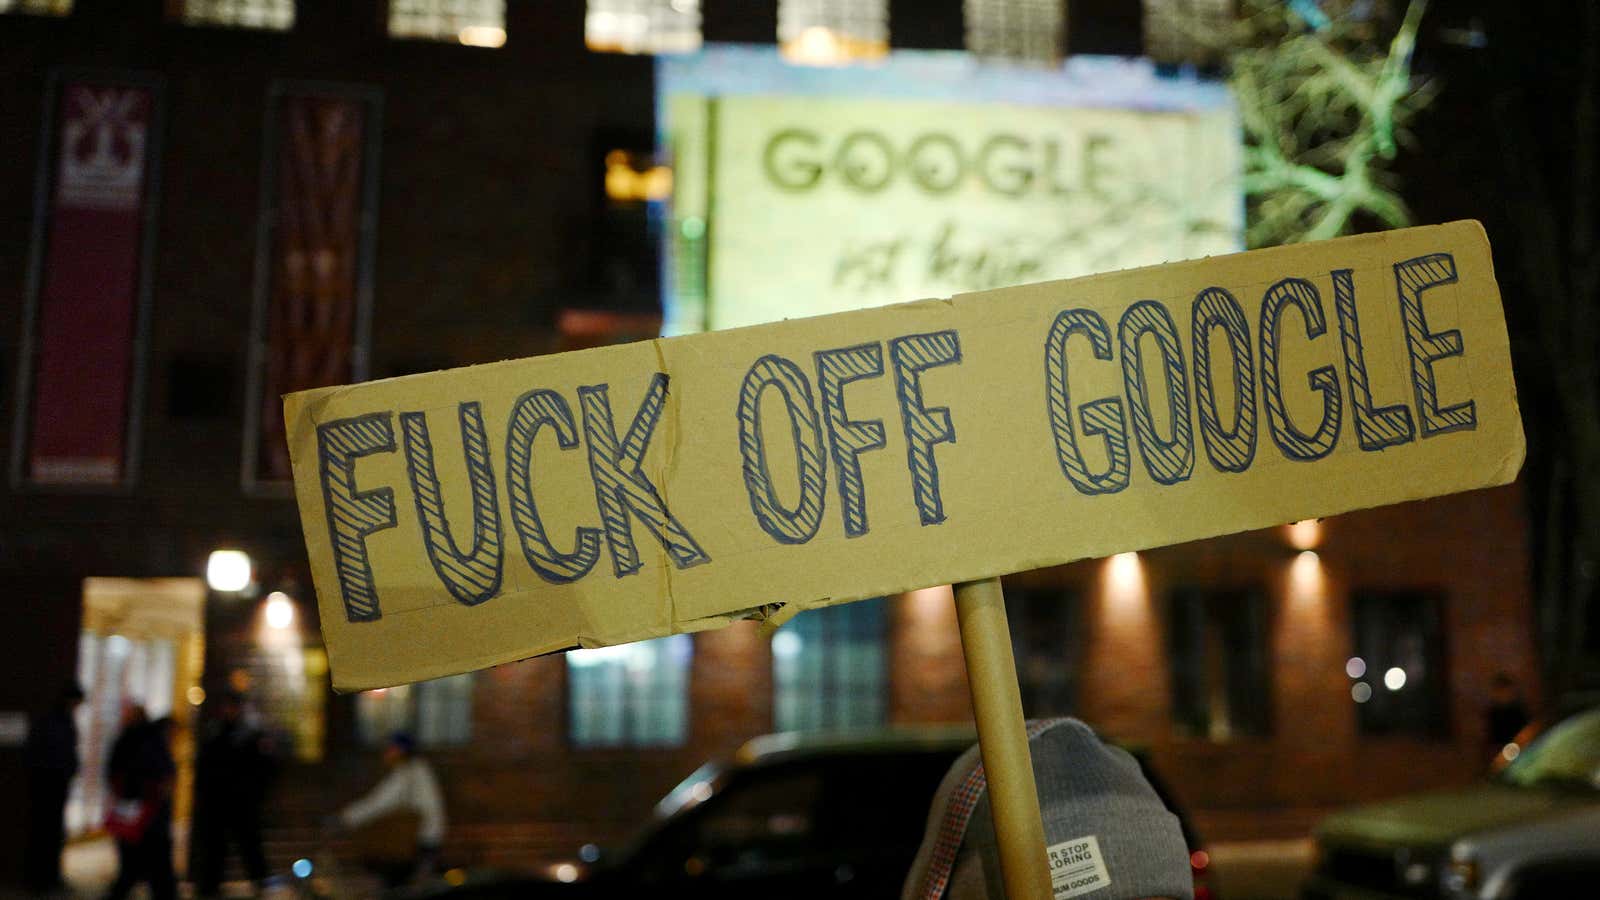 Protestors in front of Google’s campus location last December.